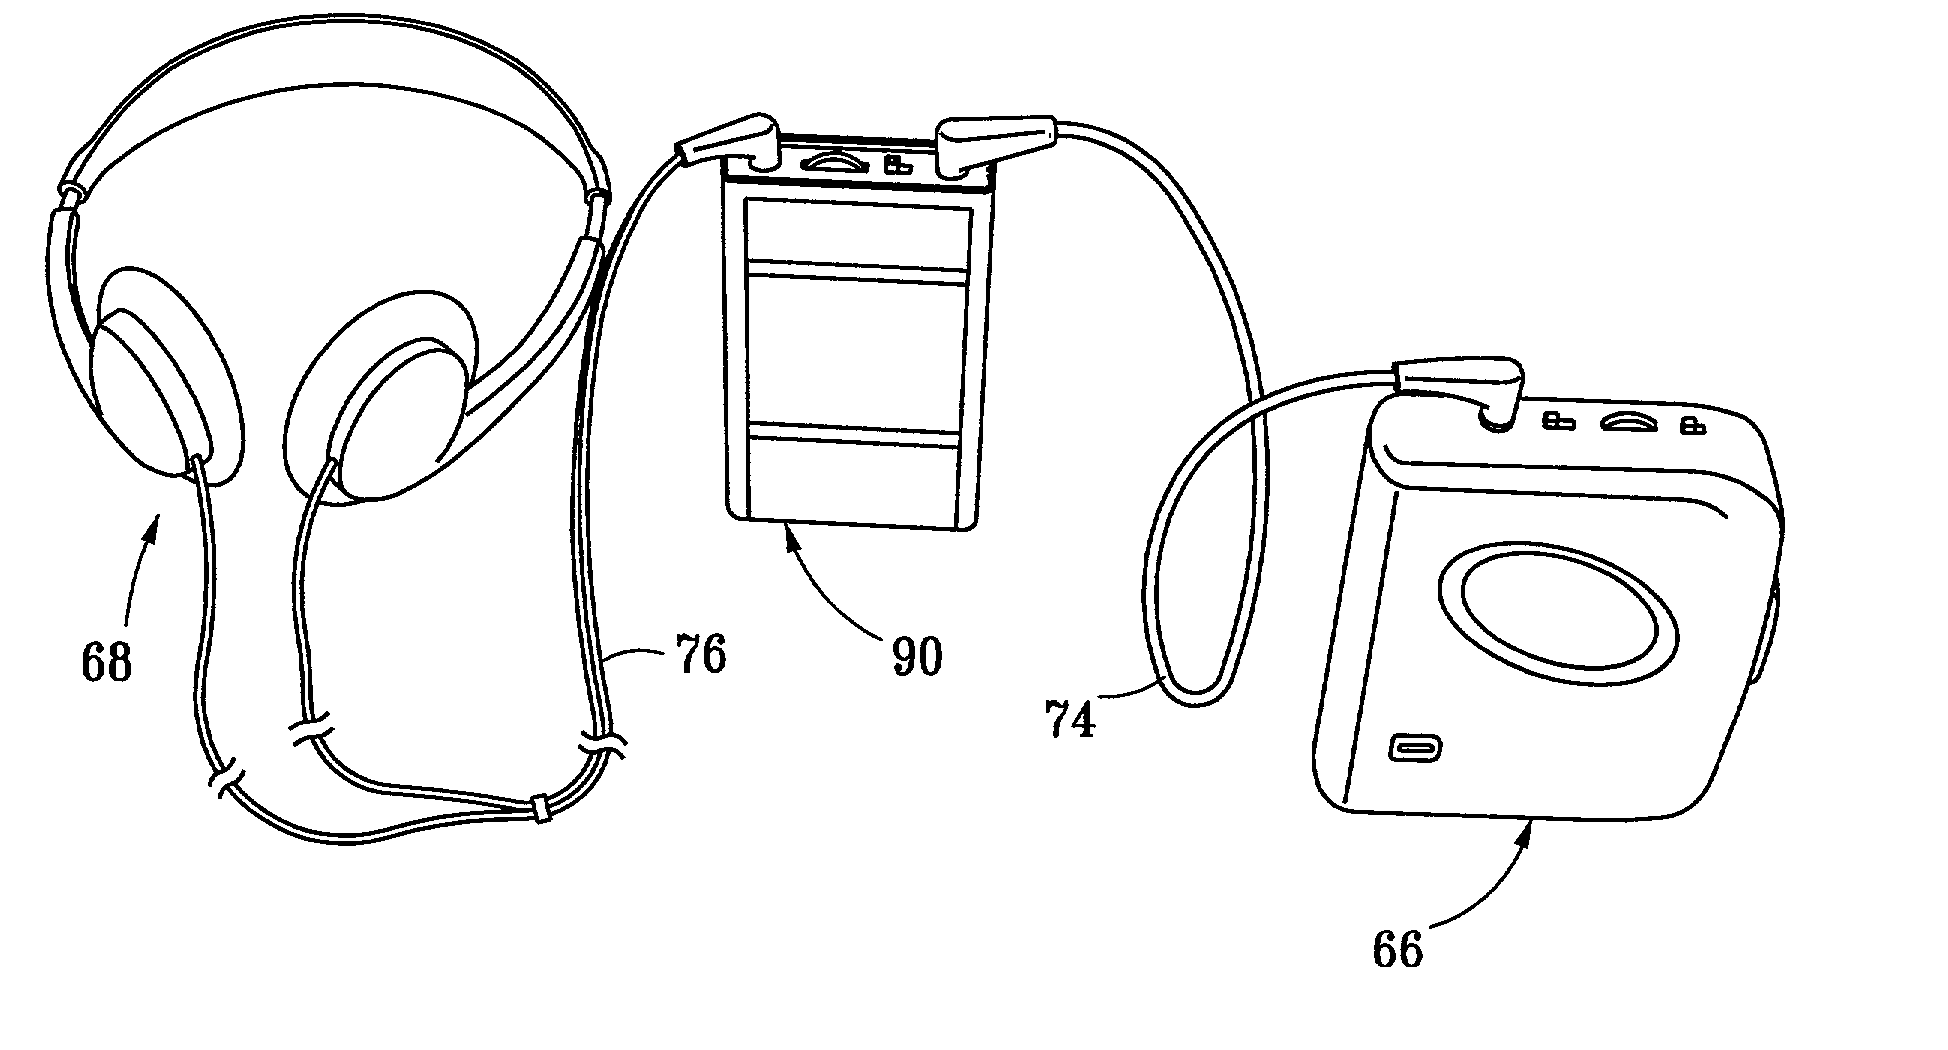 Headphone amplifier